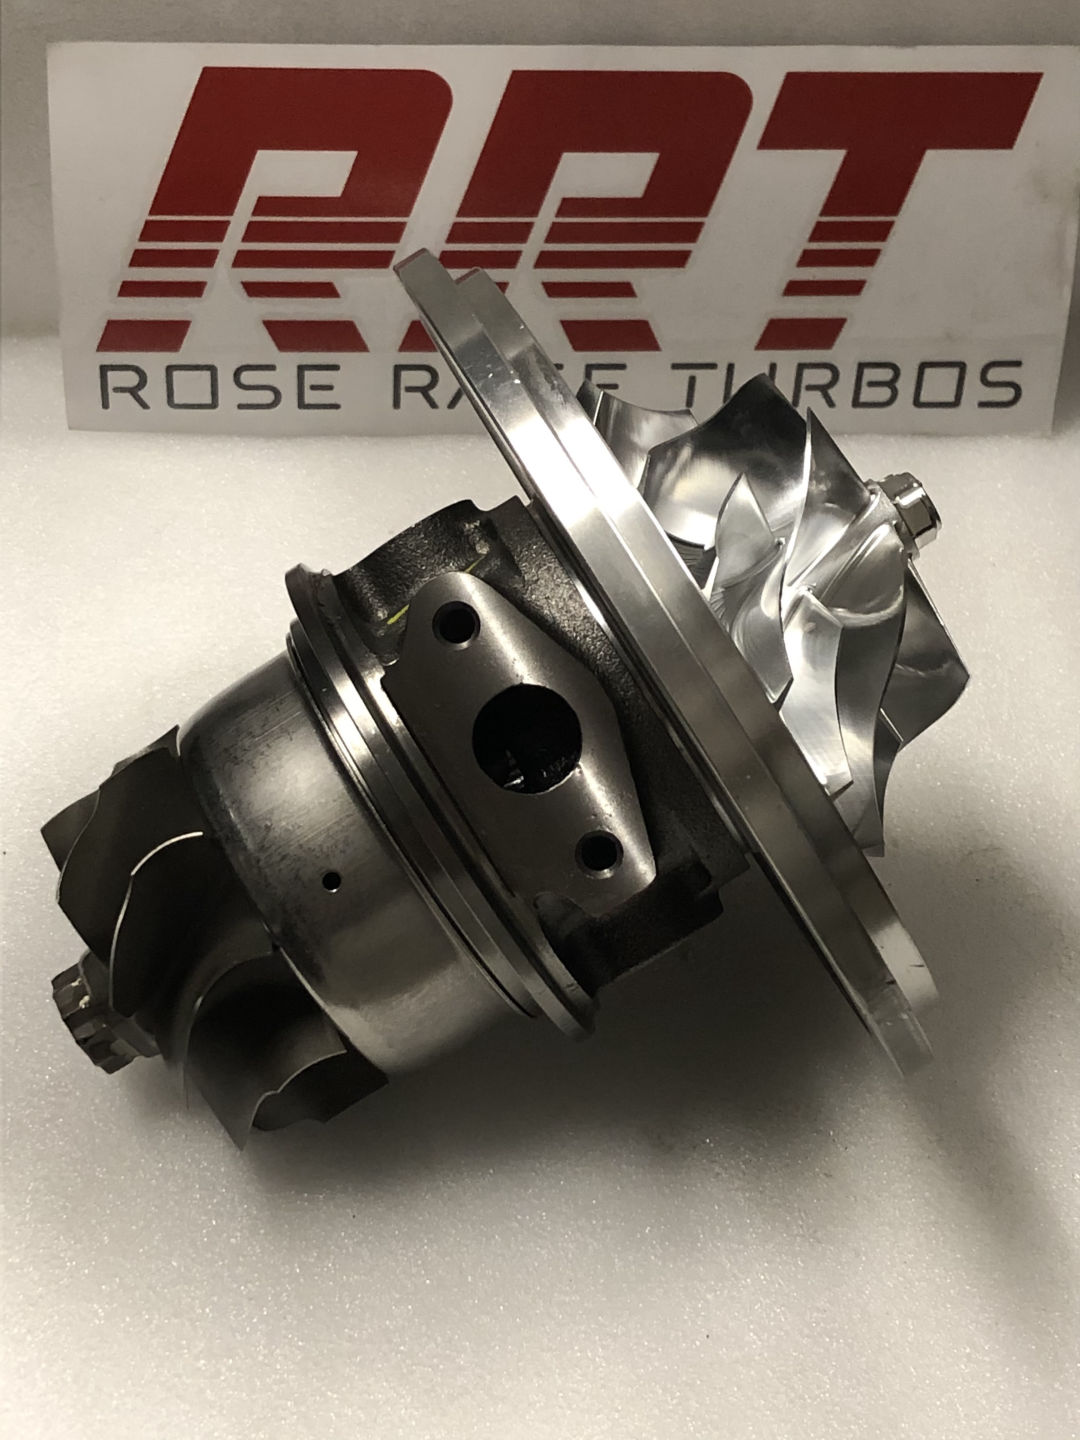 GT4508R custom built performance turbo by rose rage turbos | m2kagt4508r27xbc ball bearing turbo repair rebuild upgrade service